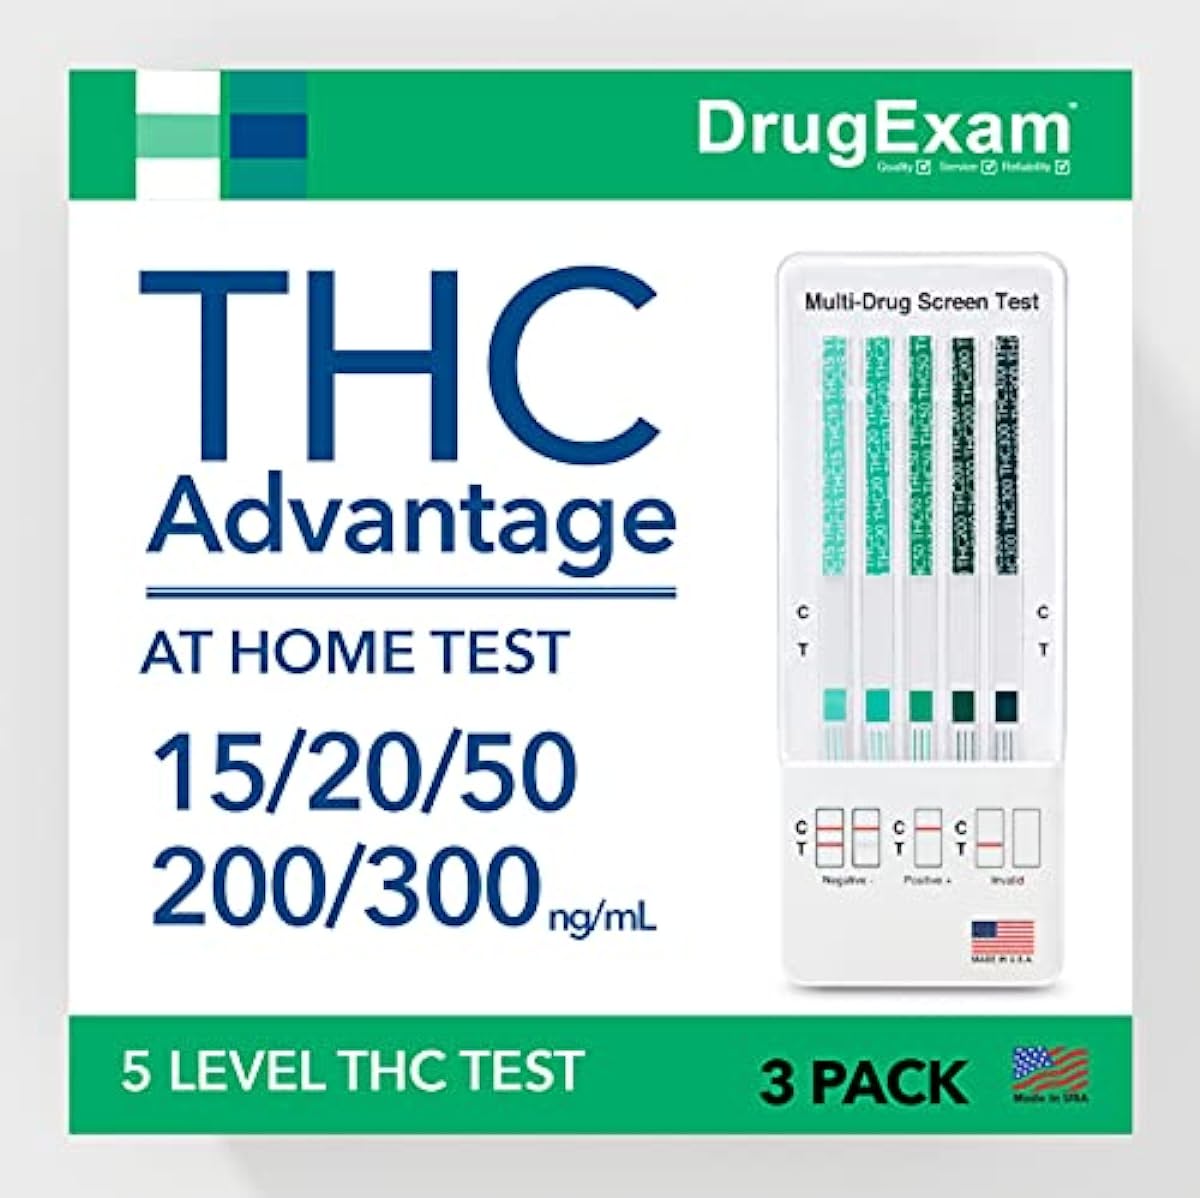 3 Pack - DrugExam THC Advantage Made in USA Multi Level Marijuana Home Urine Test Kit. Highly Sensitive THC 5 Level Drug Test Kit. Detects at 15 ng/mL, 20 ng/mL, 50 ng/mL, 200 ng/mL and 300 ng/mL (3)